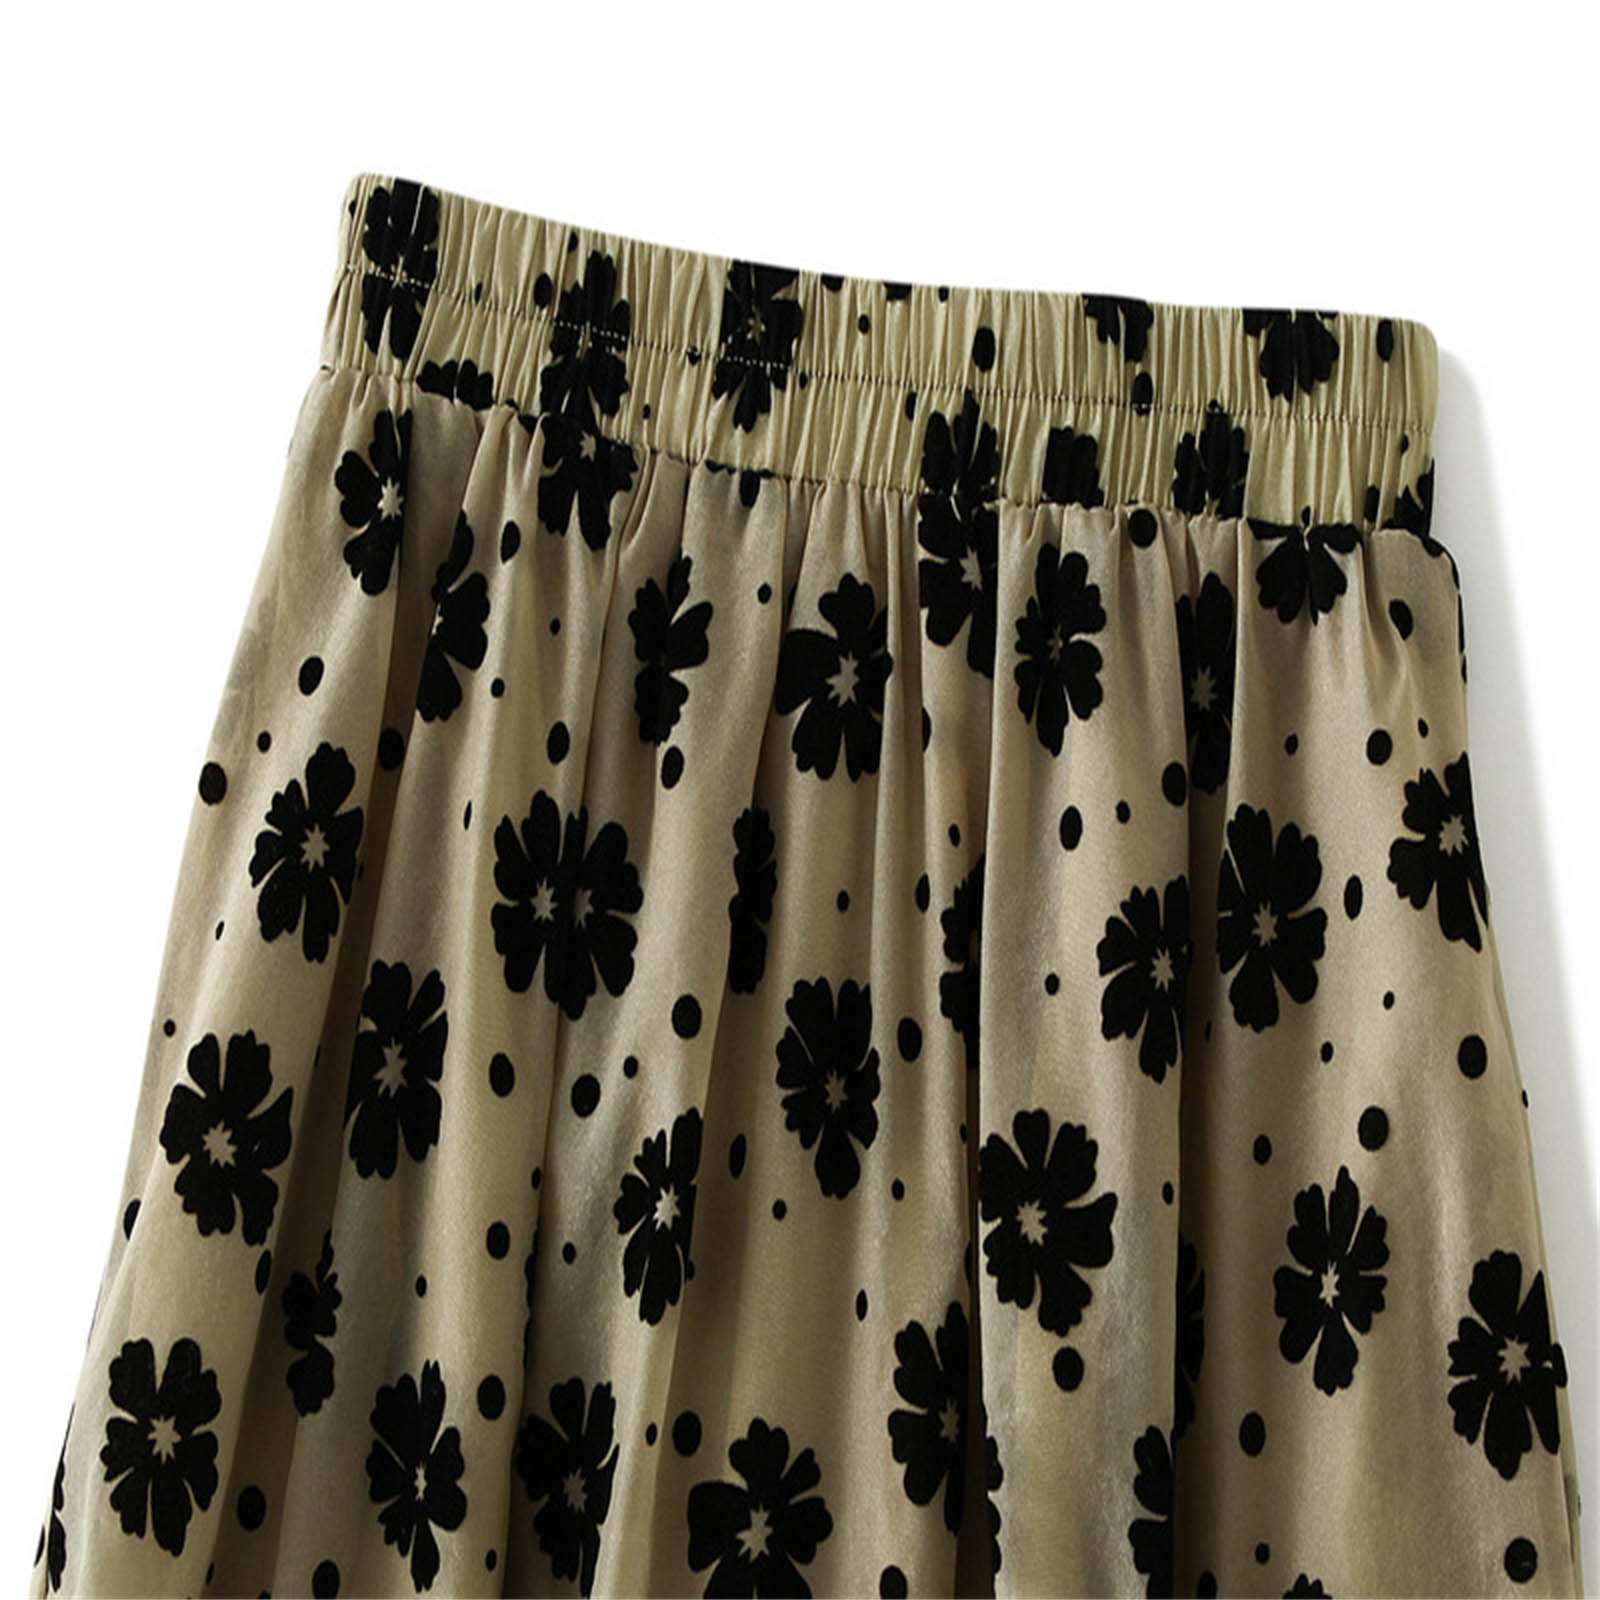 Skirts for Women Printing Floral Pattern Satin Women Fashion 